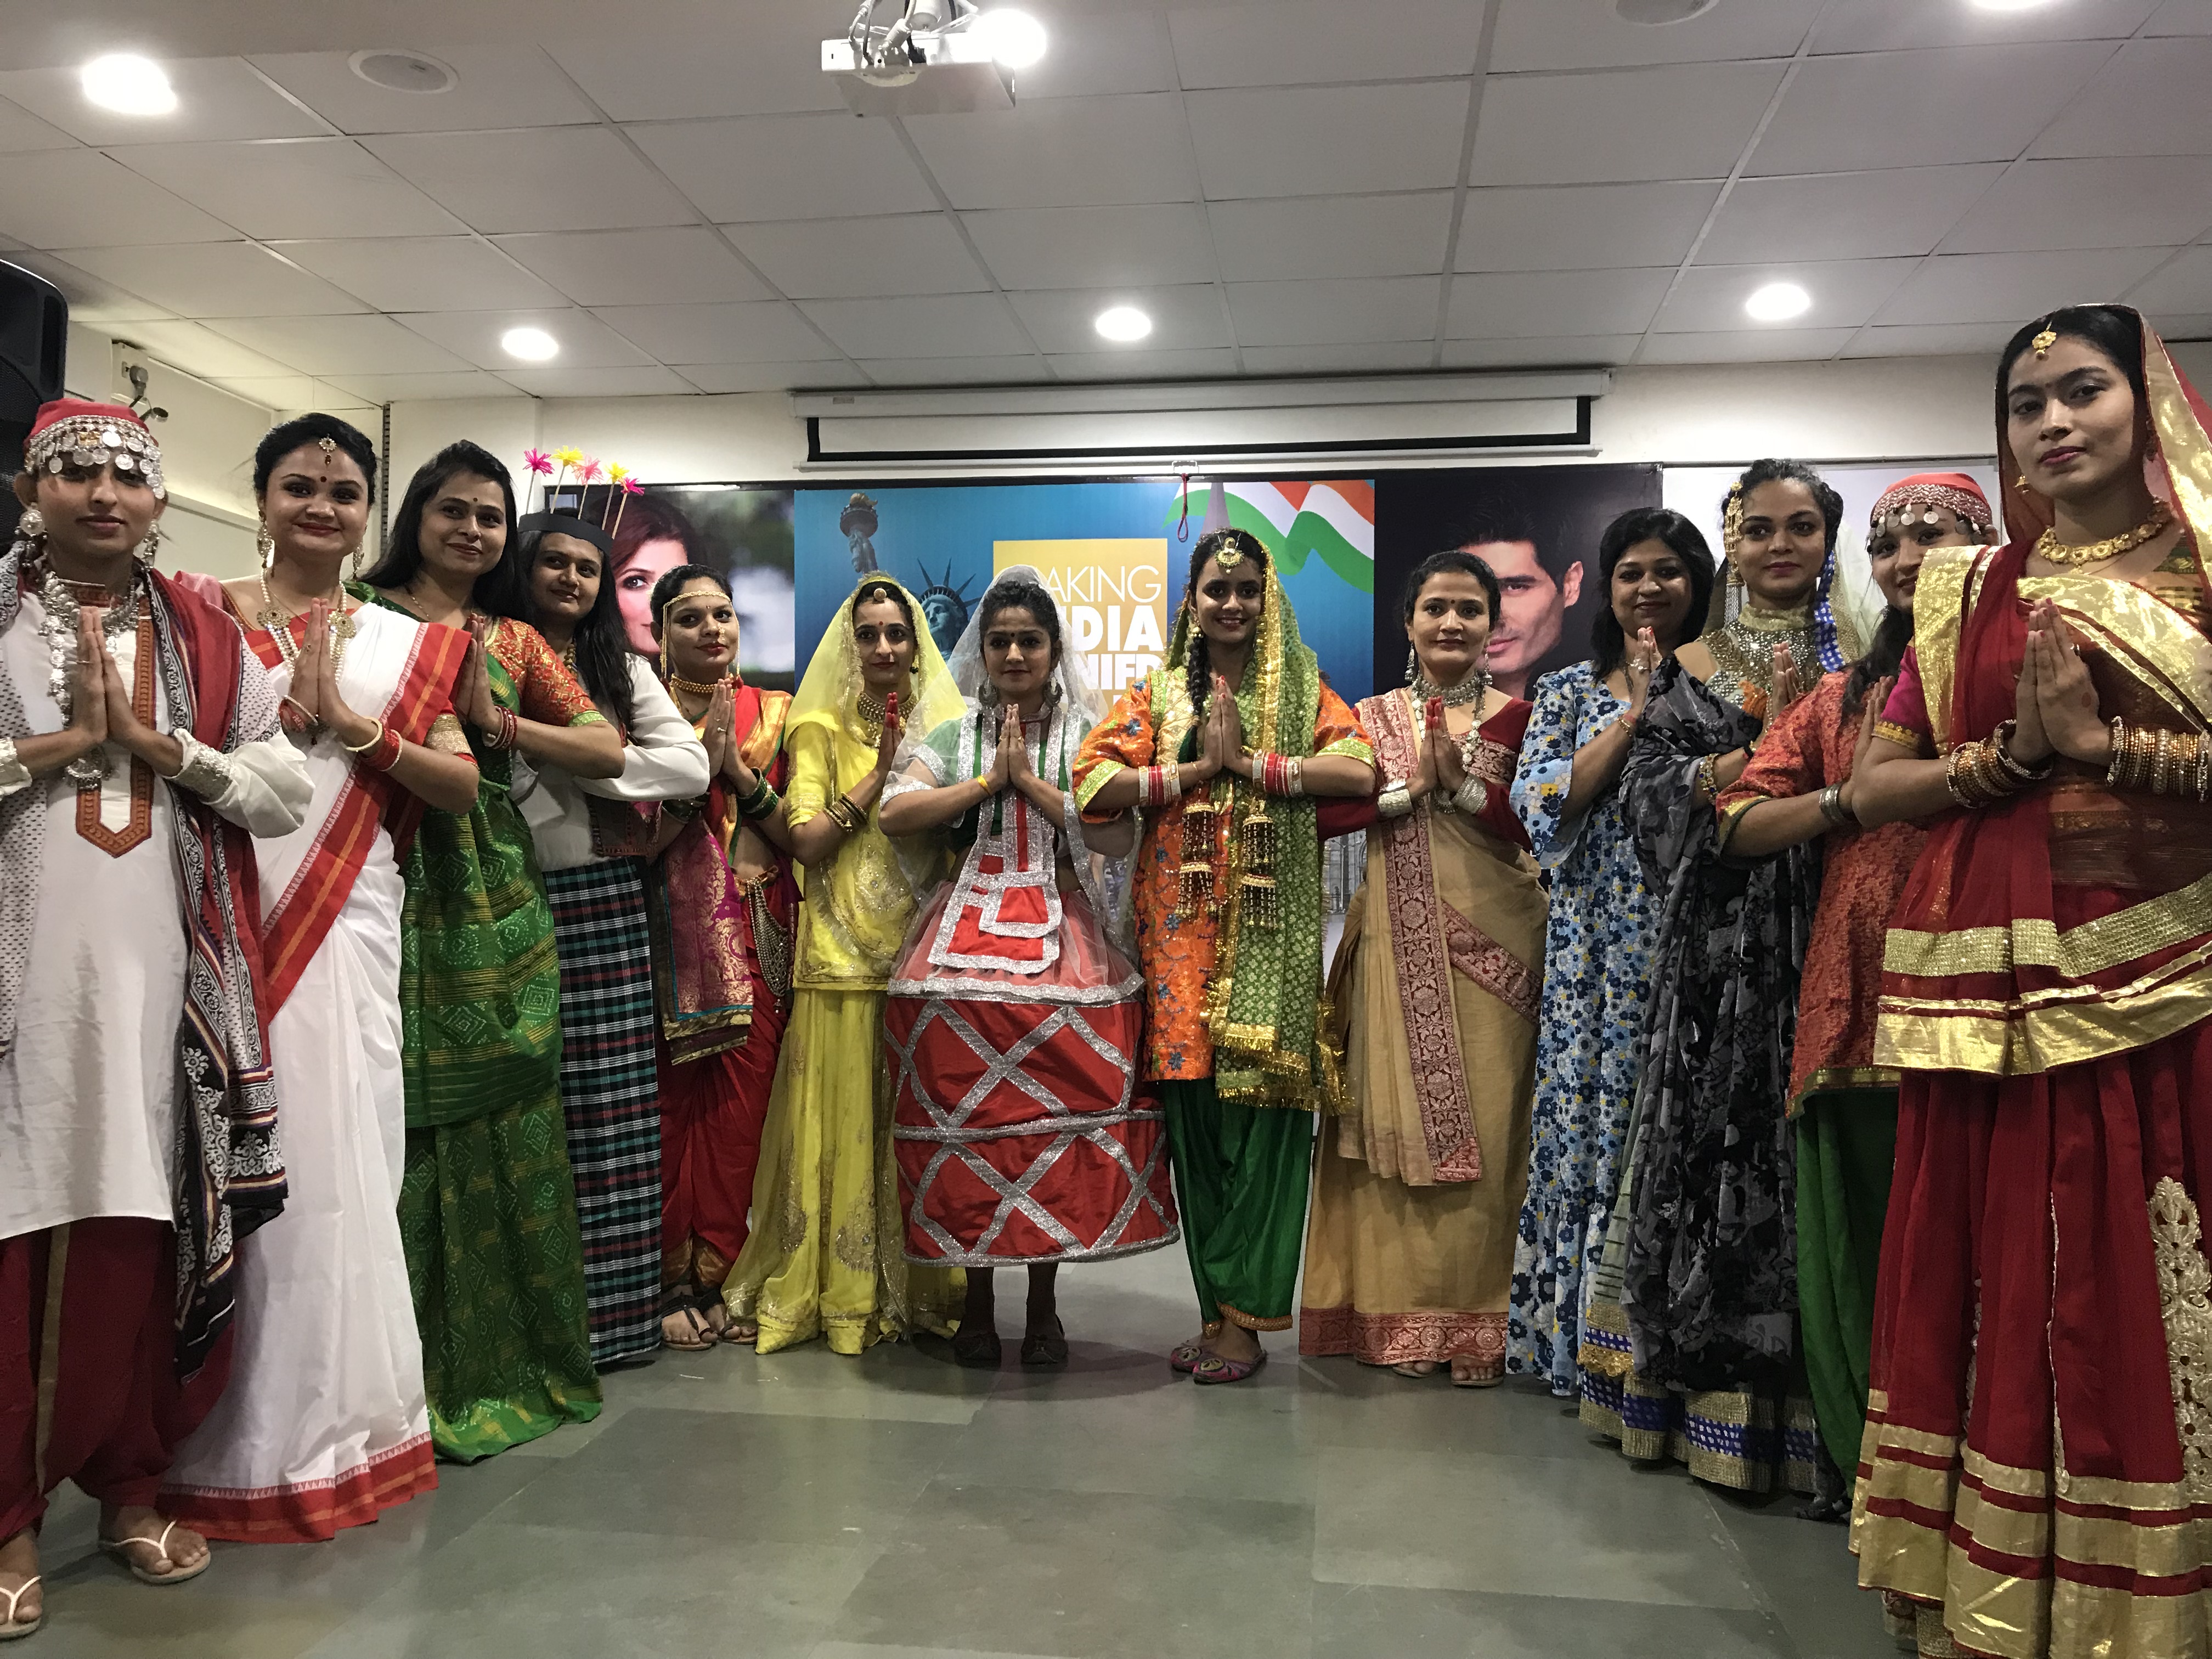 INIFD Vadodara centre turns into Mini India